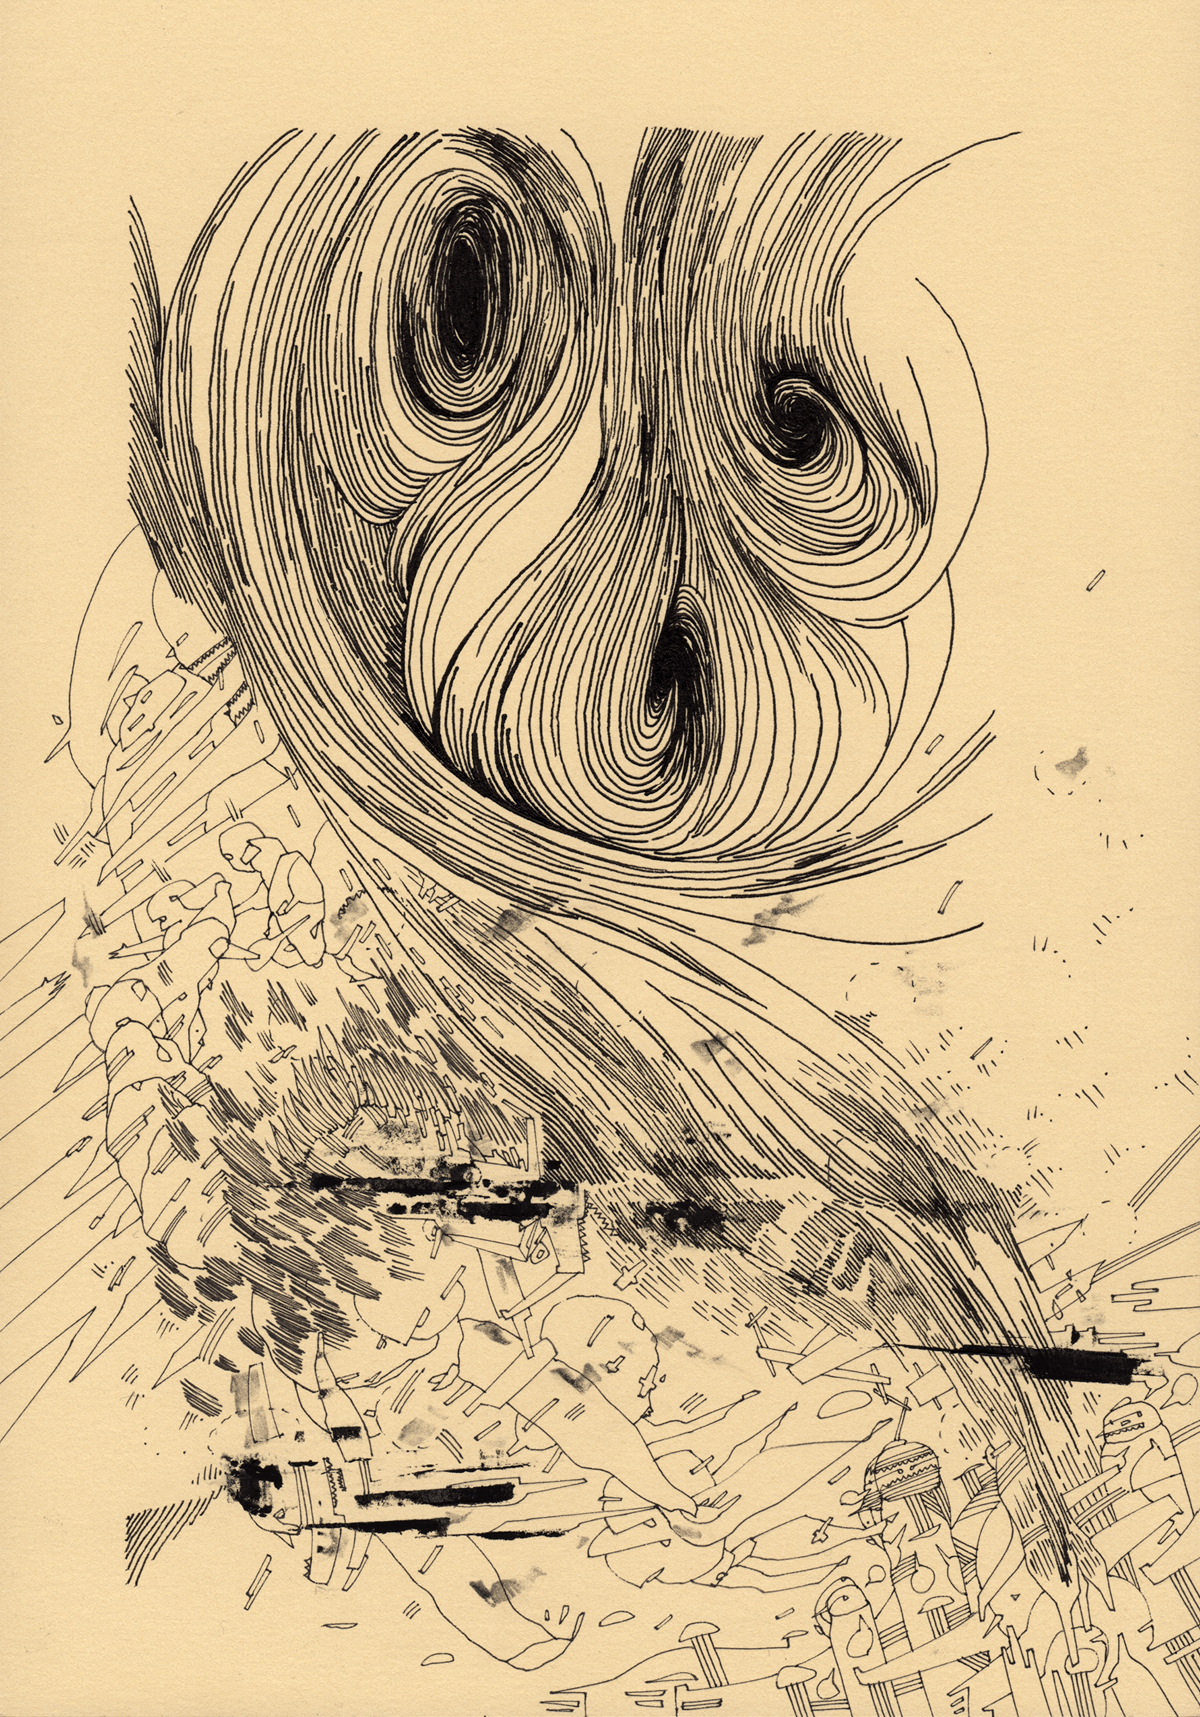 line drawing Collaboration ryan tippery robert malte engelsmann kaeghoro chicago berlin abstract art ink gouache analog paper